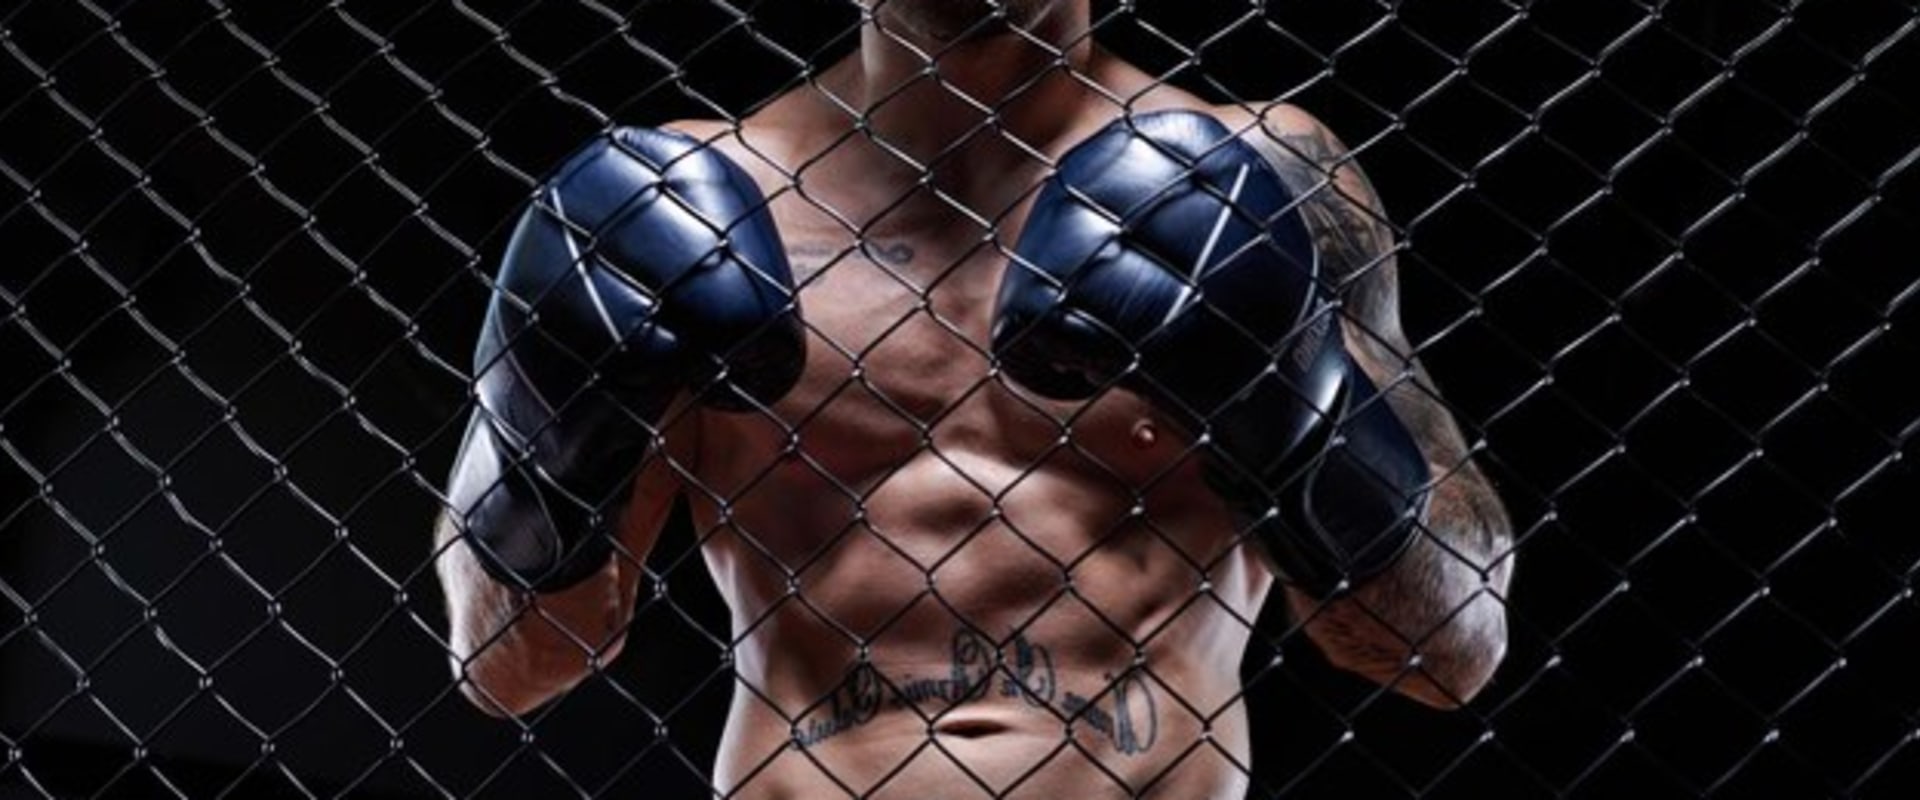 Is mixed martial arts boxing?